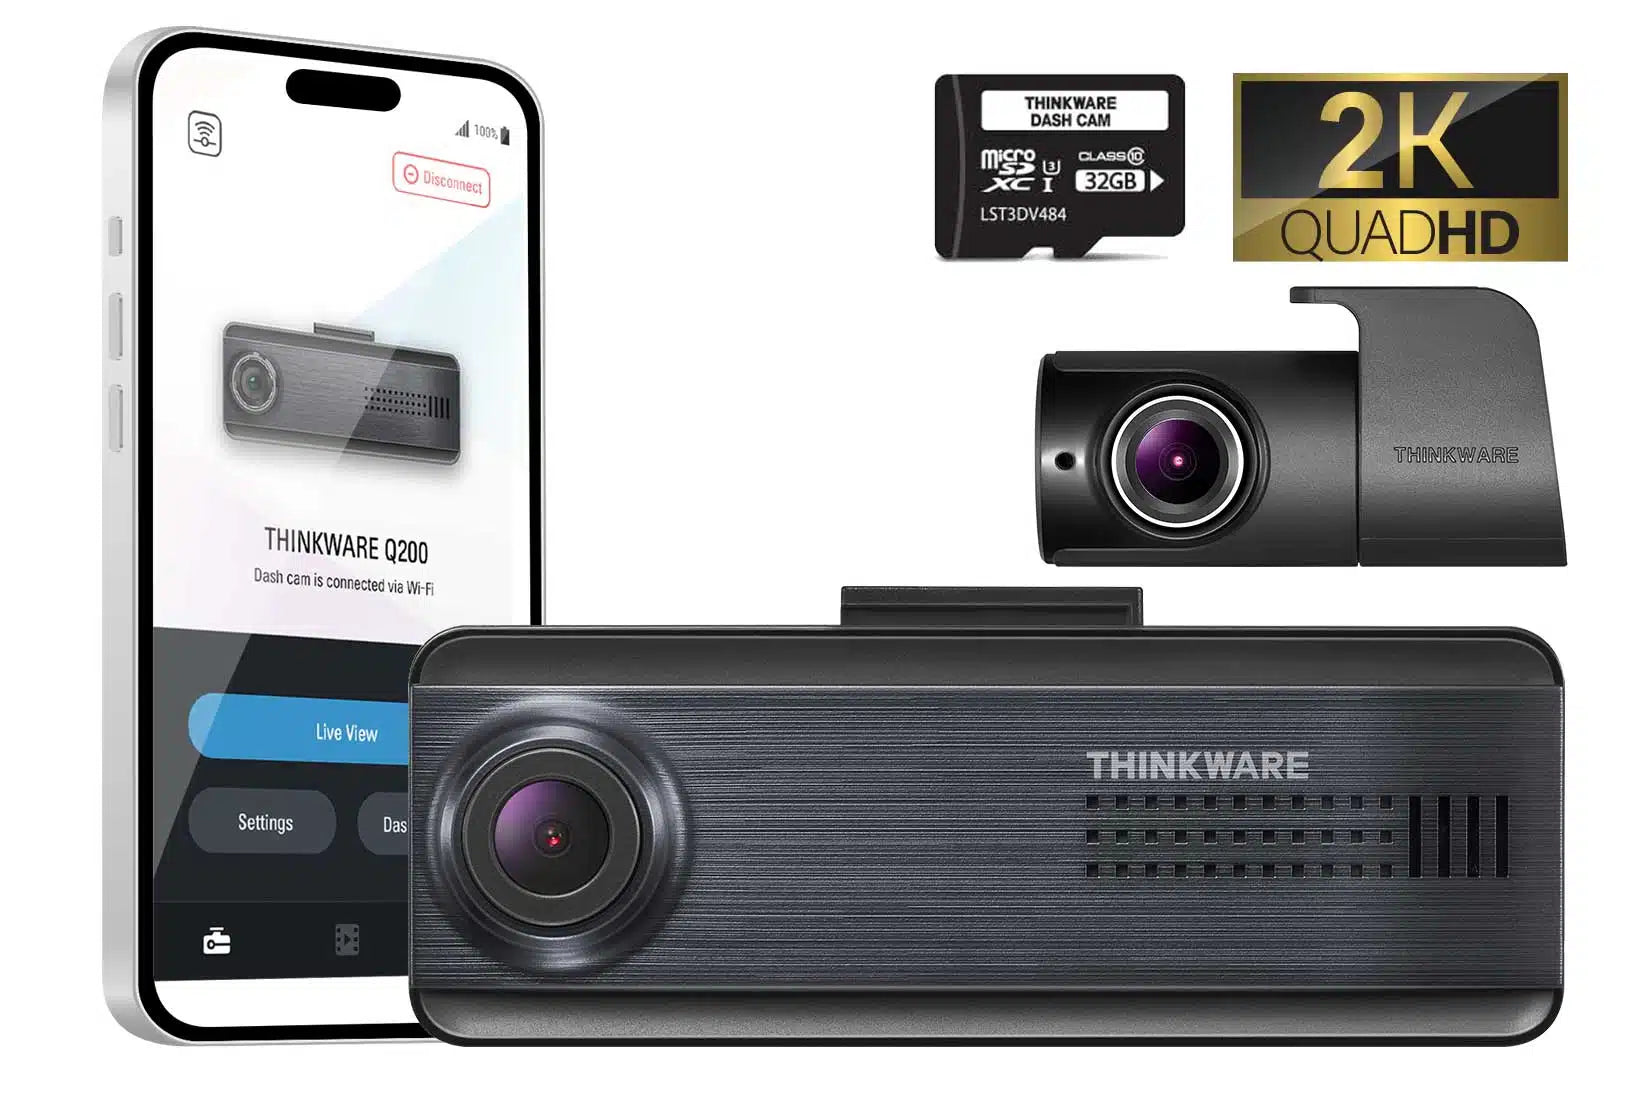 Thinkware Q200DCH32 Dash Camera, 2K+1080p @ 30fps, 32GB, WiFi, GPS